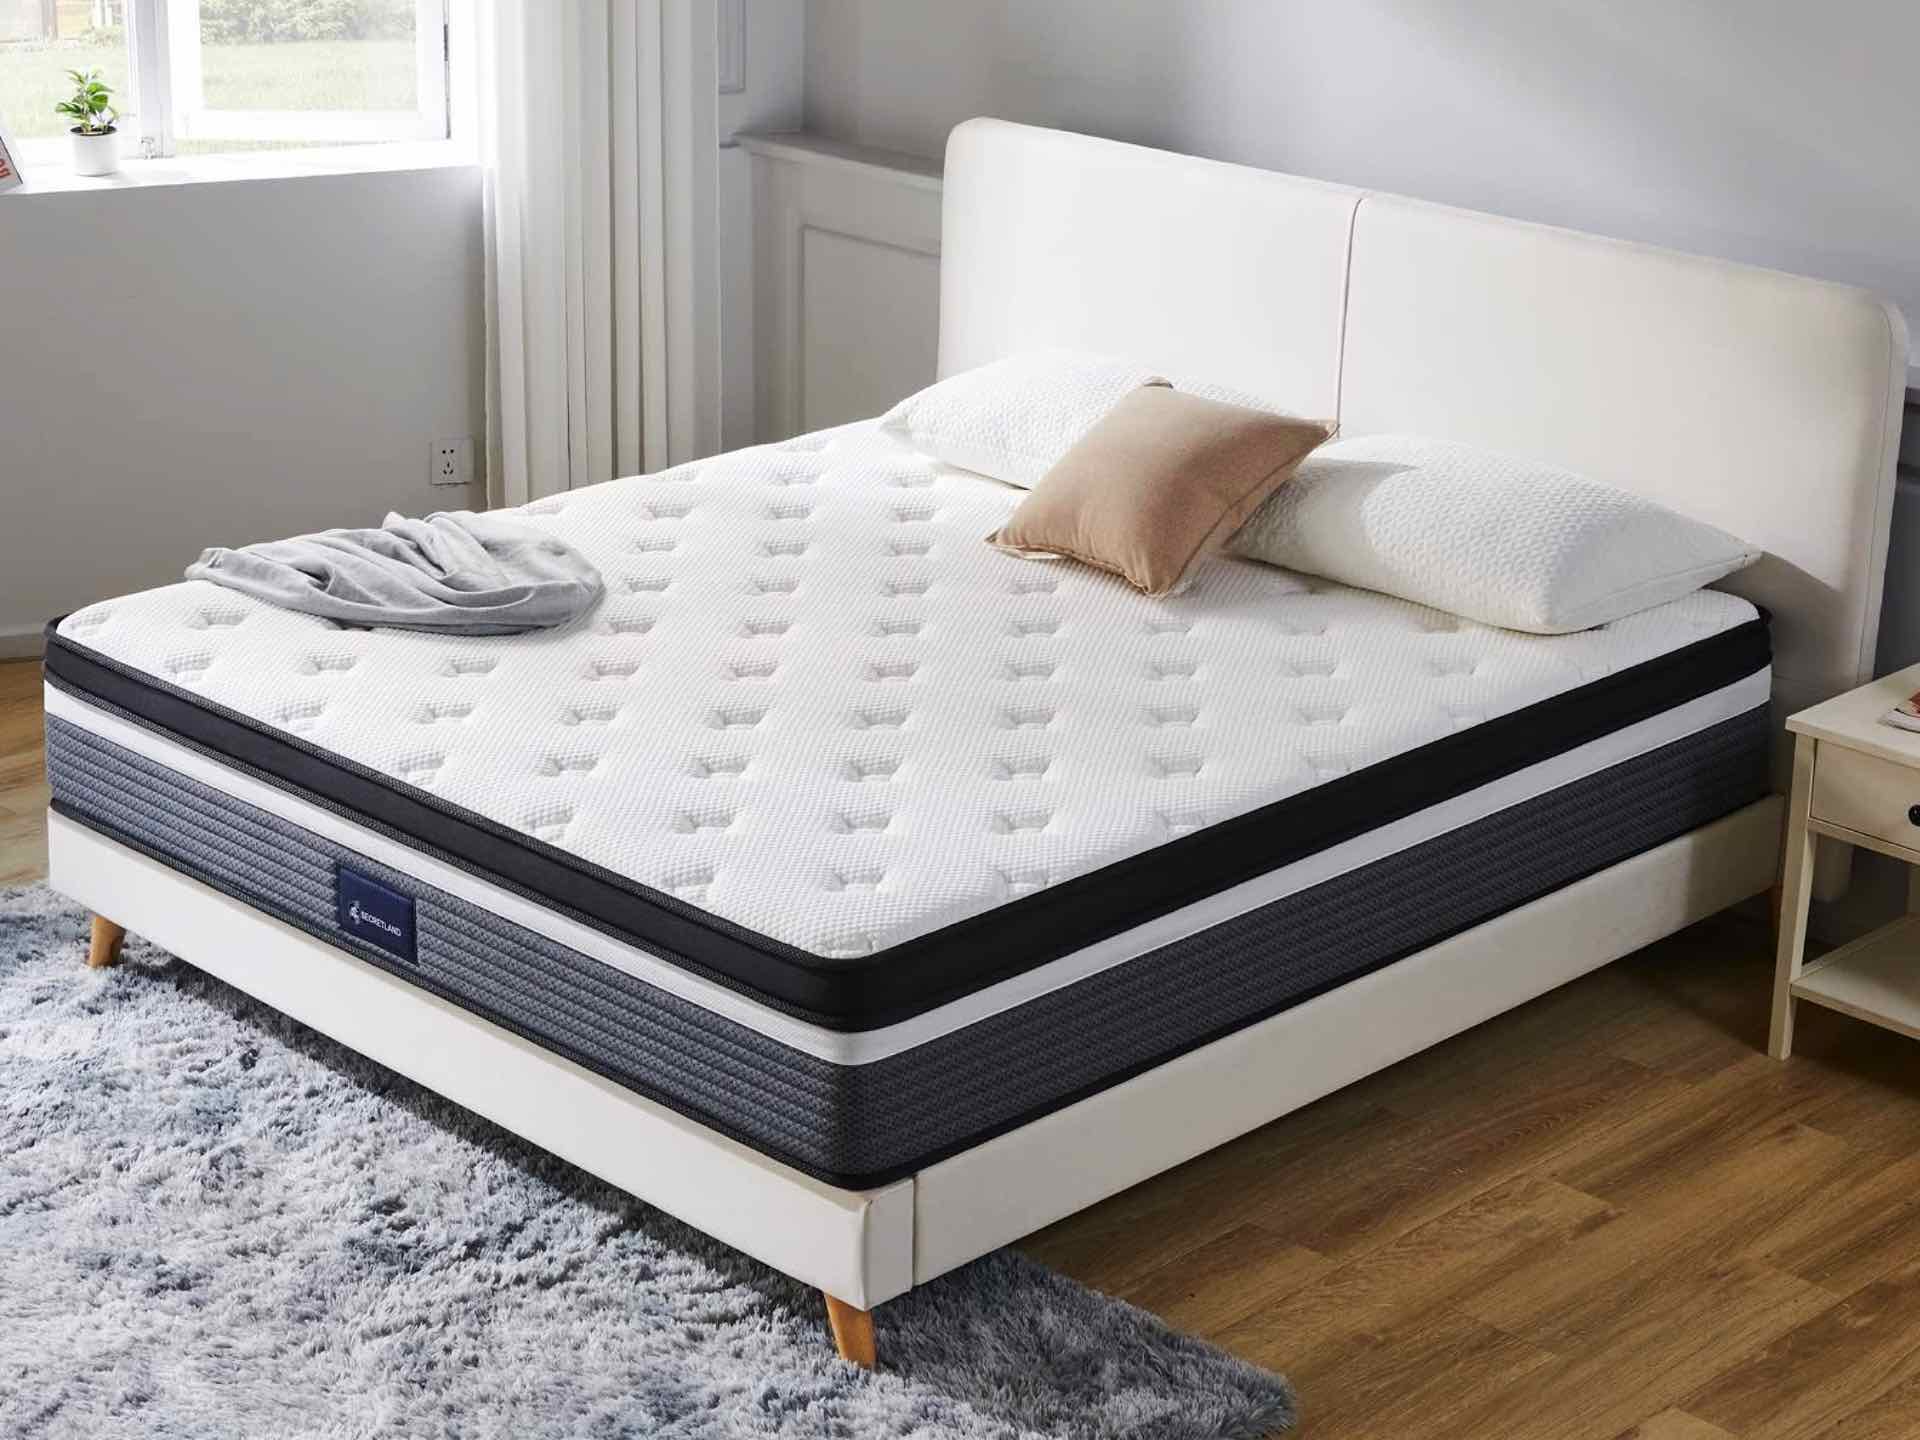 s-secretland-cooling-gel-memory-foam-individual-pocket-spring-hybrid-mattress